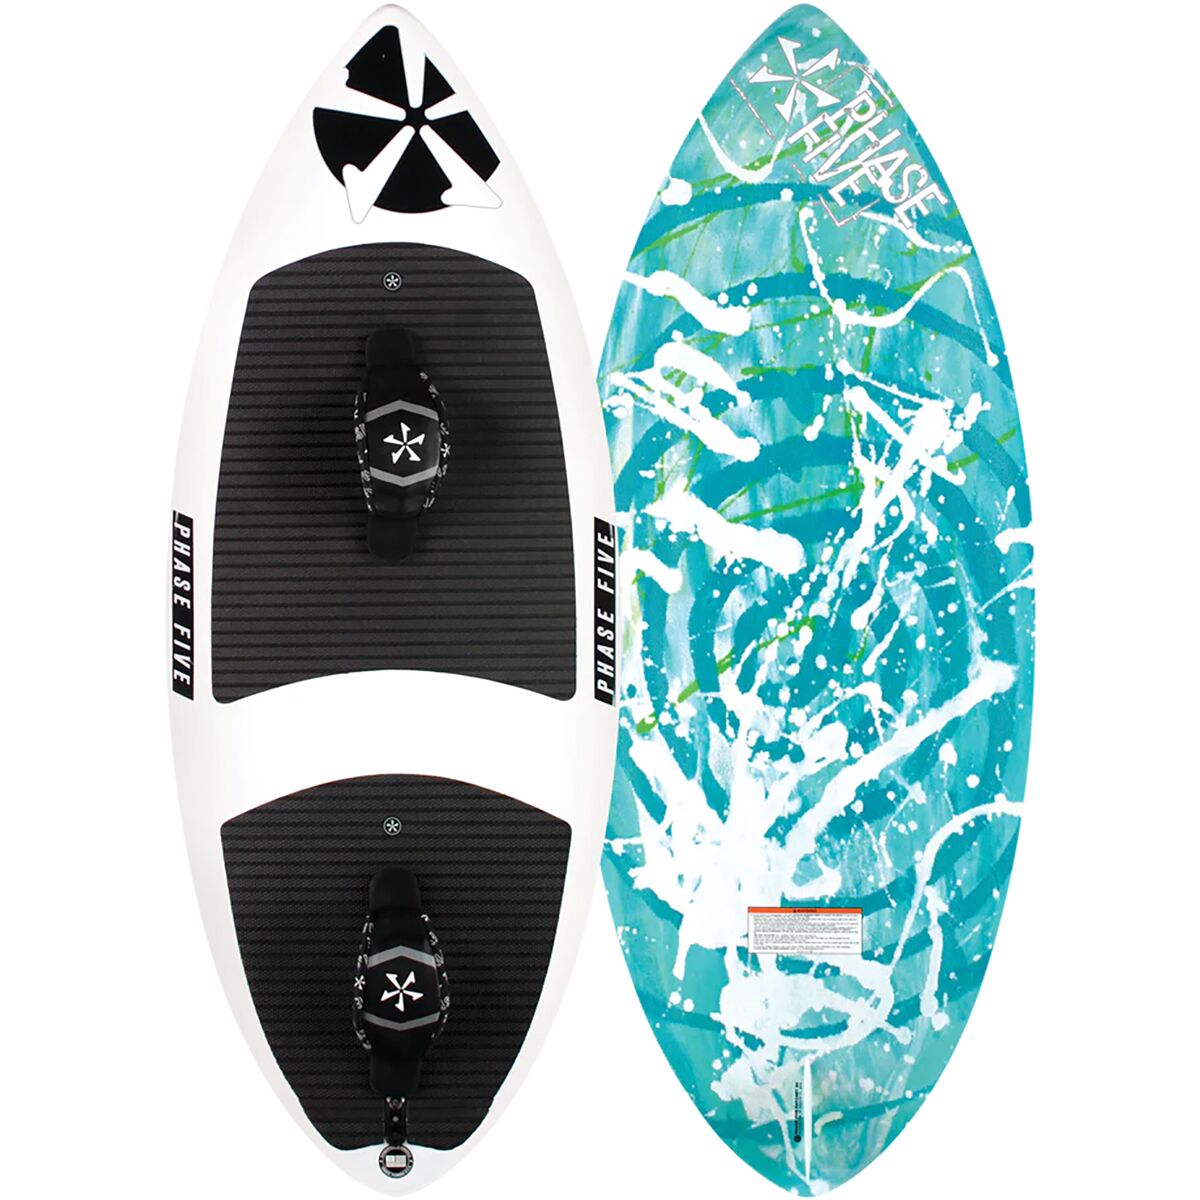 Phase5 Ratchet Strap Board Wake Surf Board